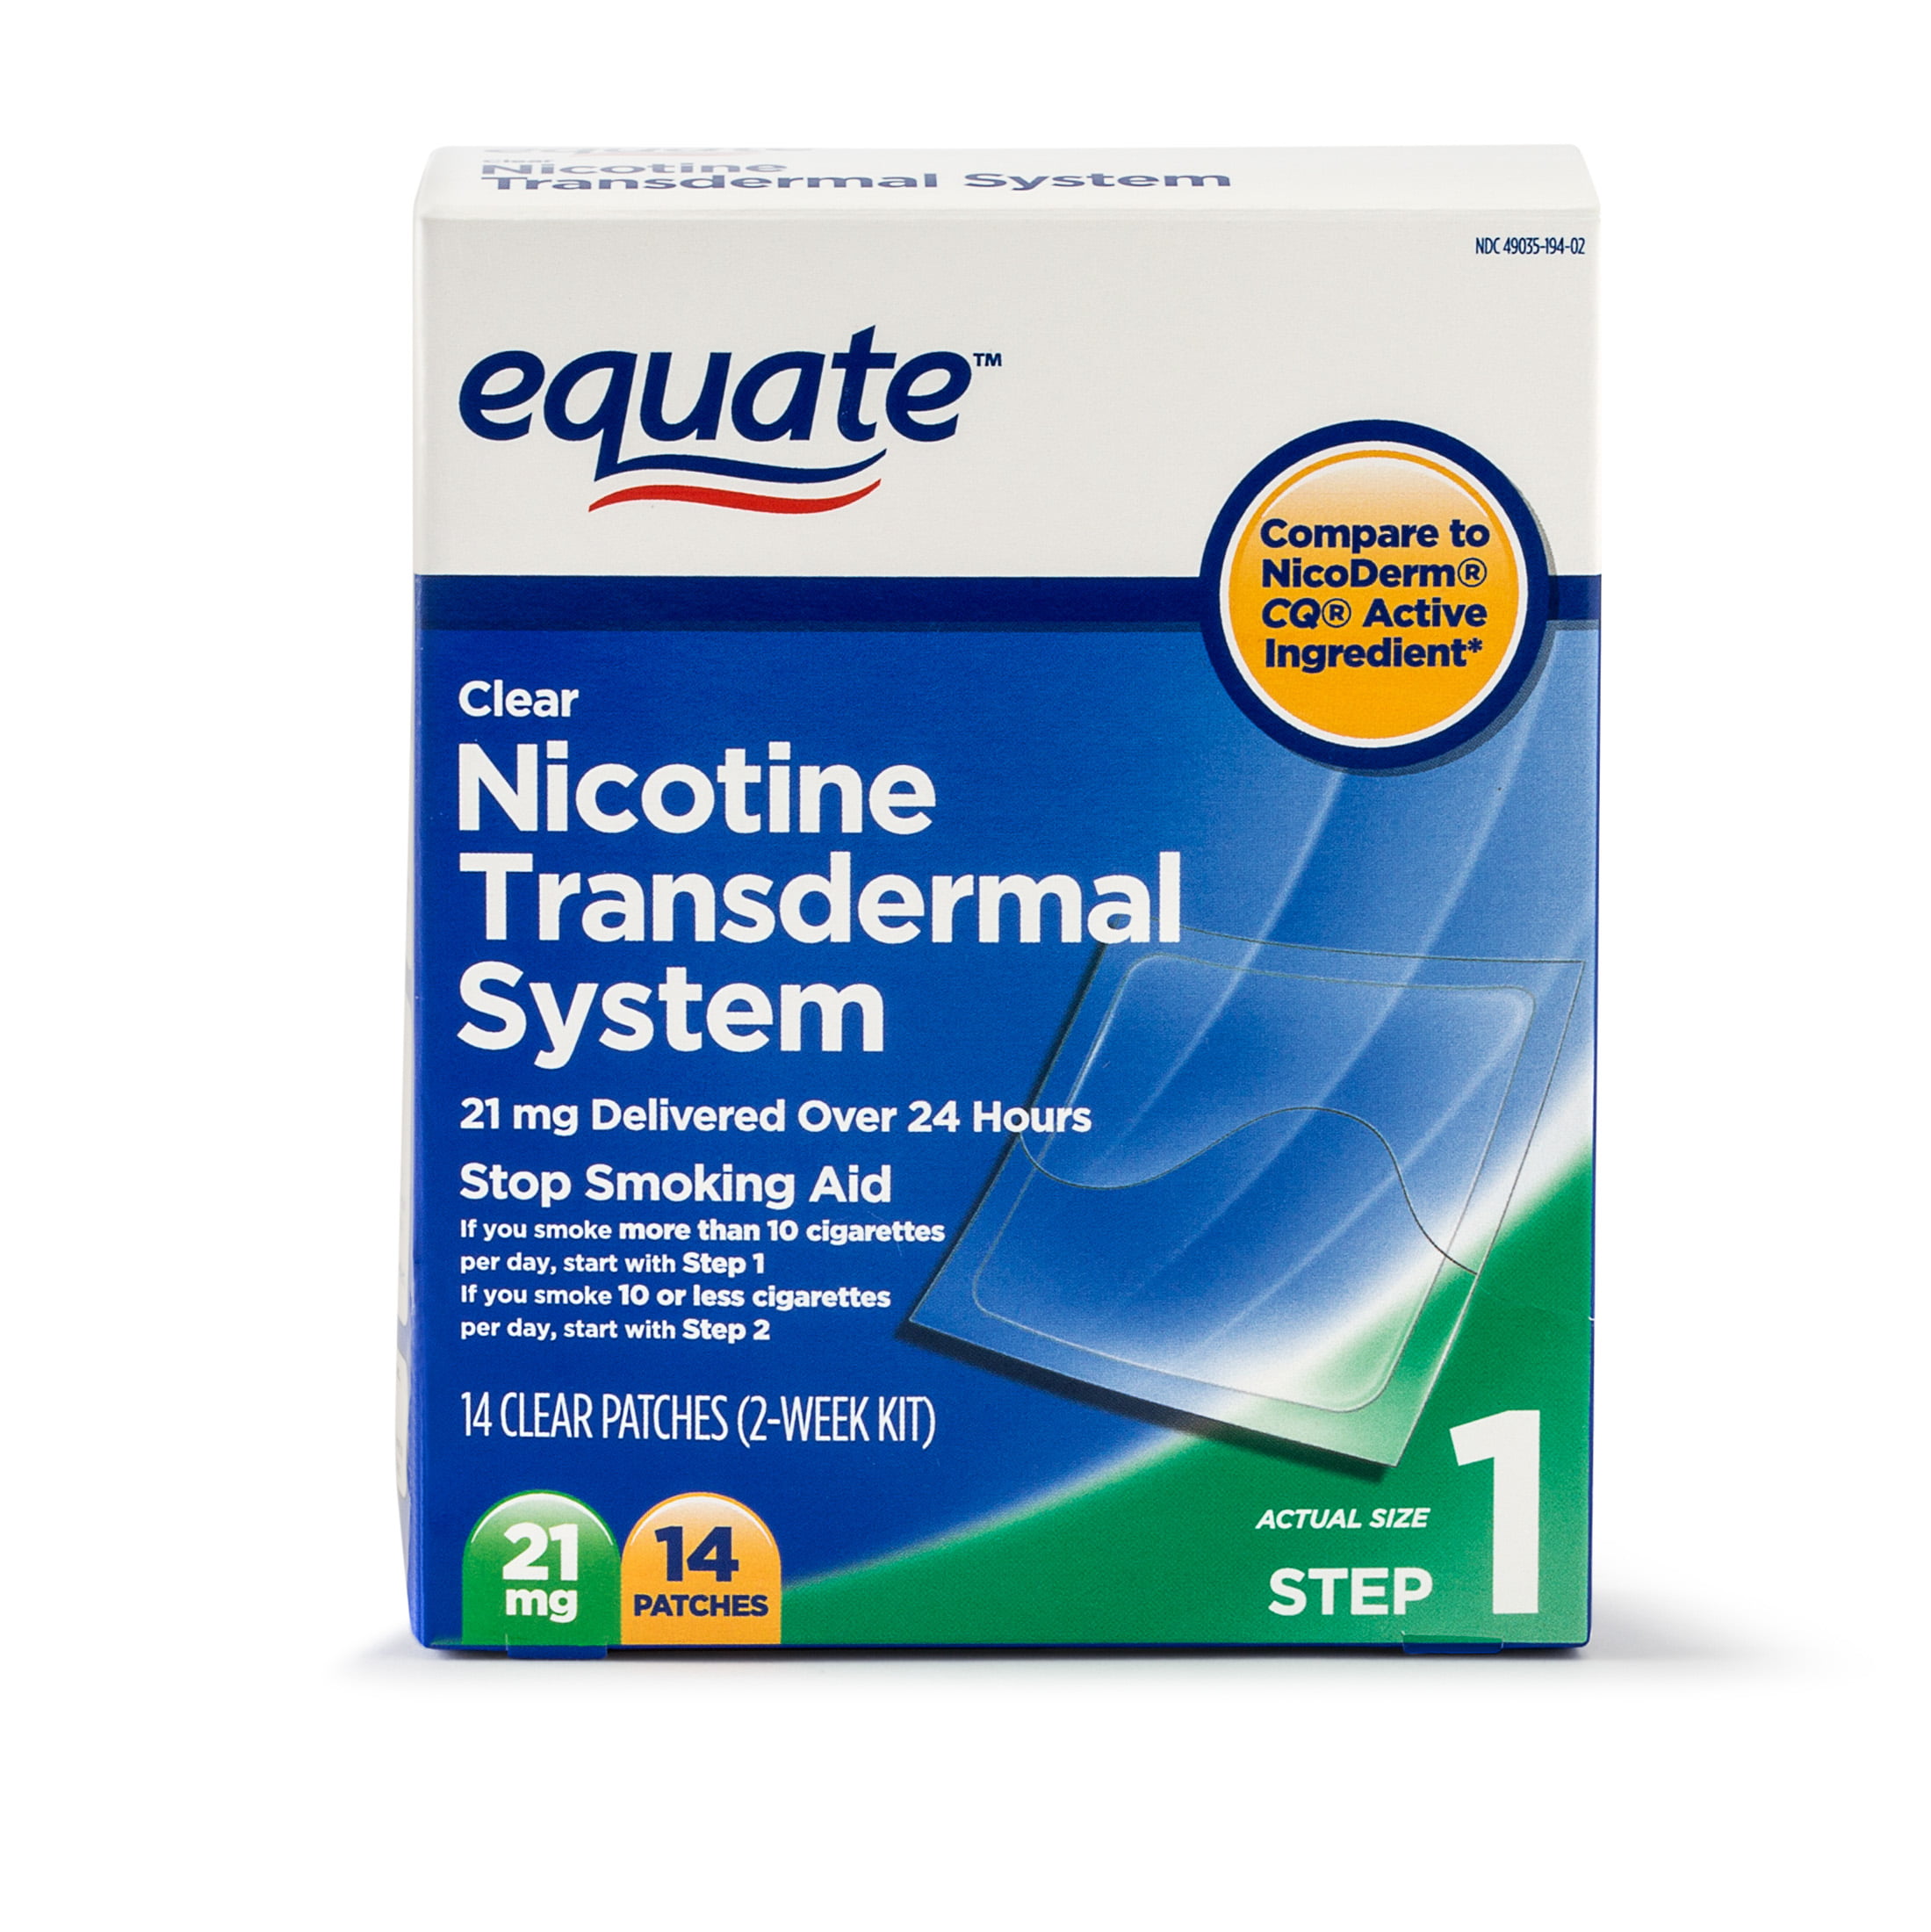 21 mg nicotine patches